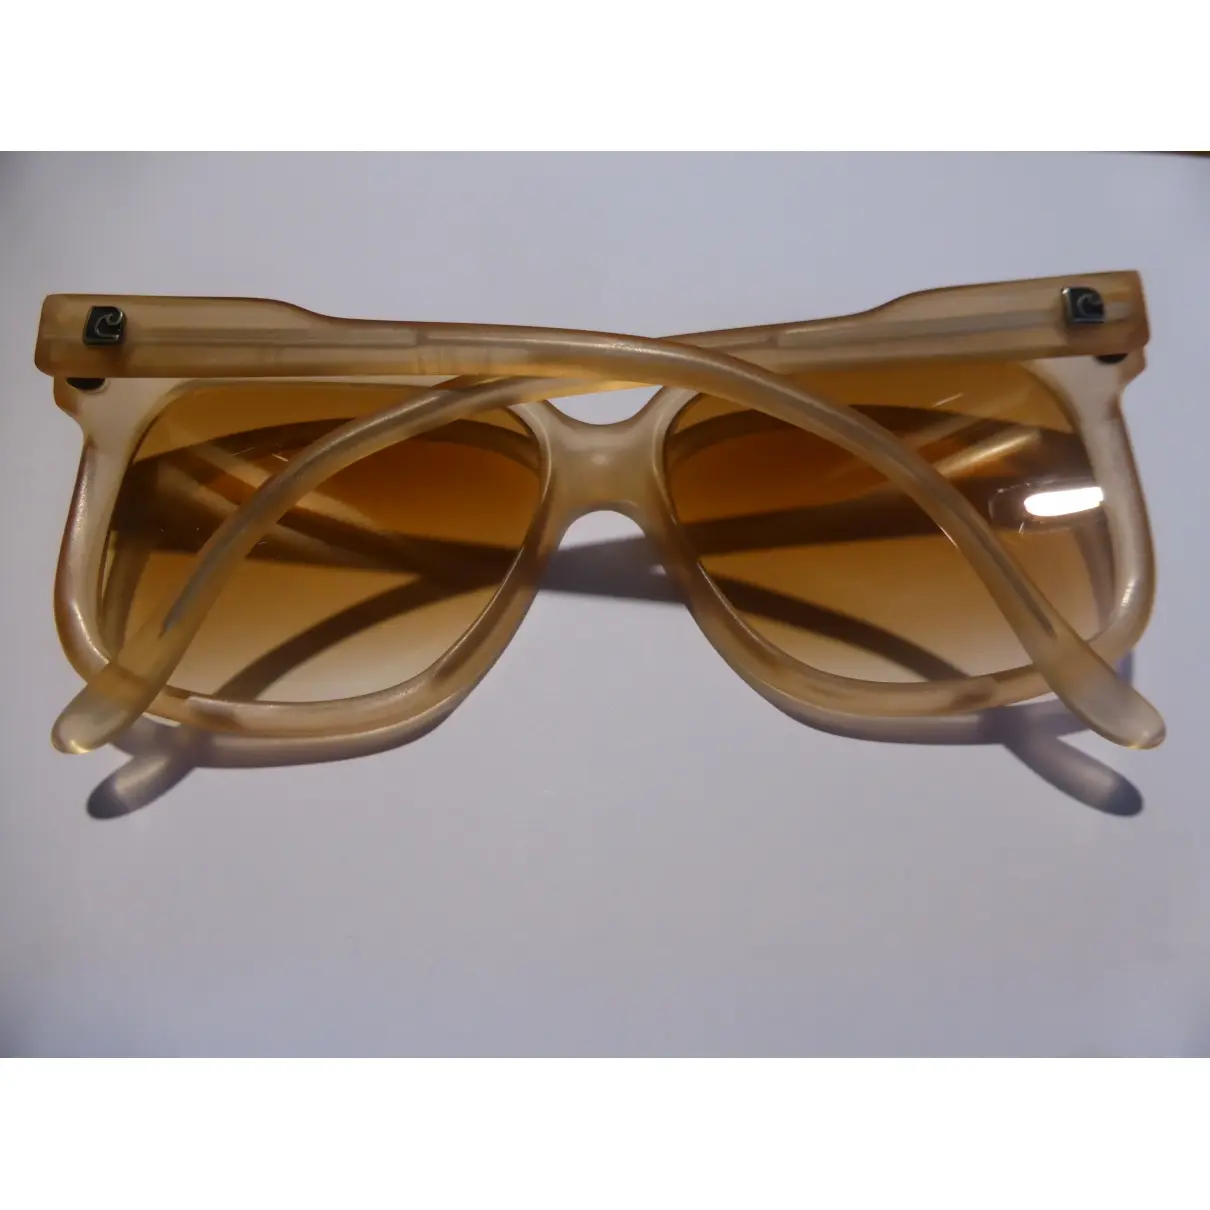 Pierre Cardin Oversized sunglasses for sale - Vintage